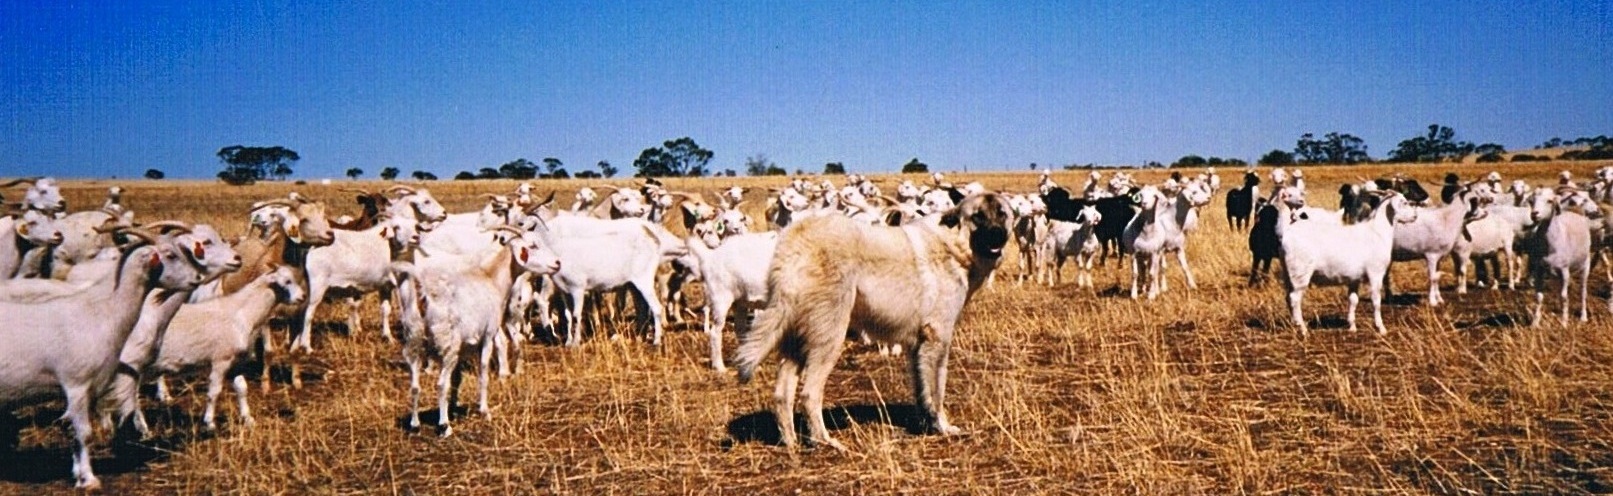 Anatolian Shepherd Dog with goats in outback Australia